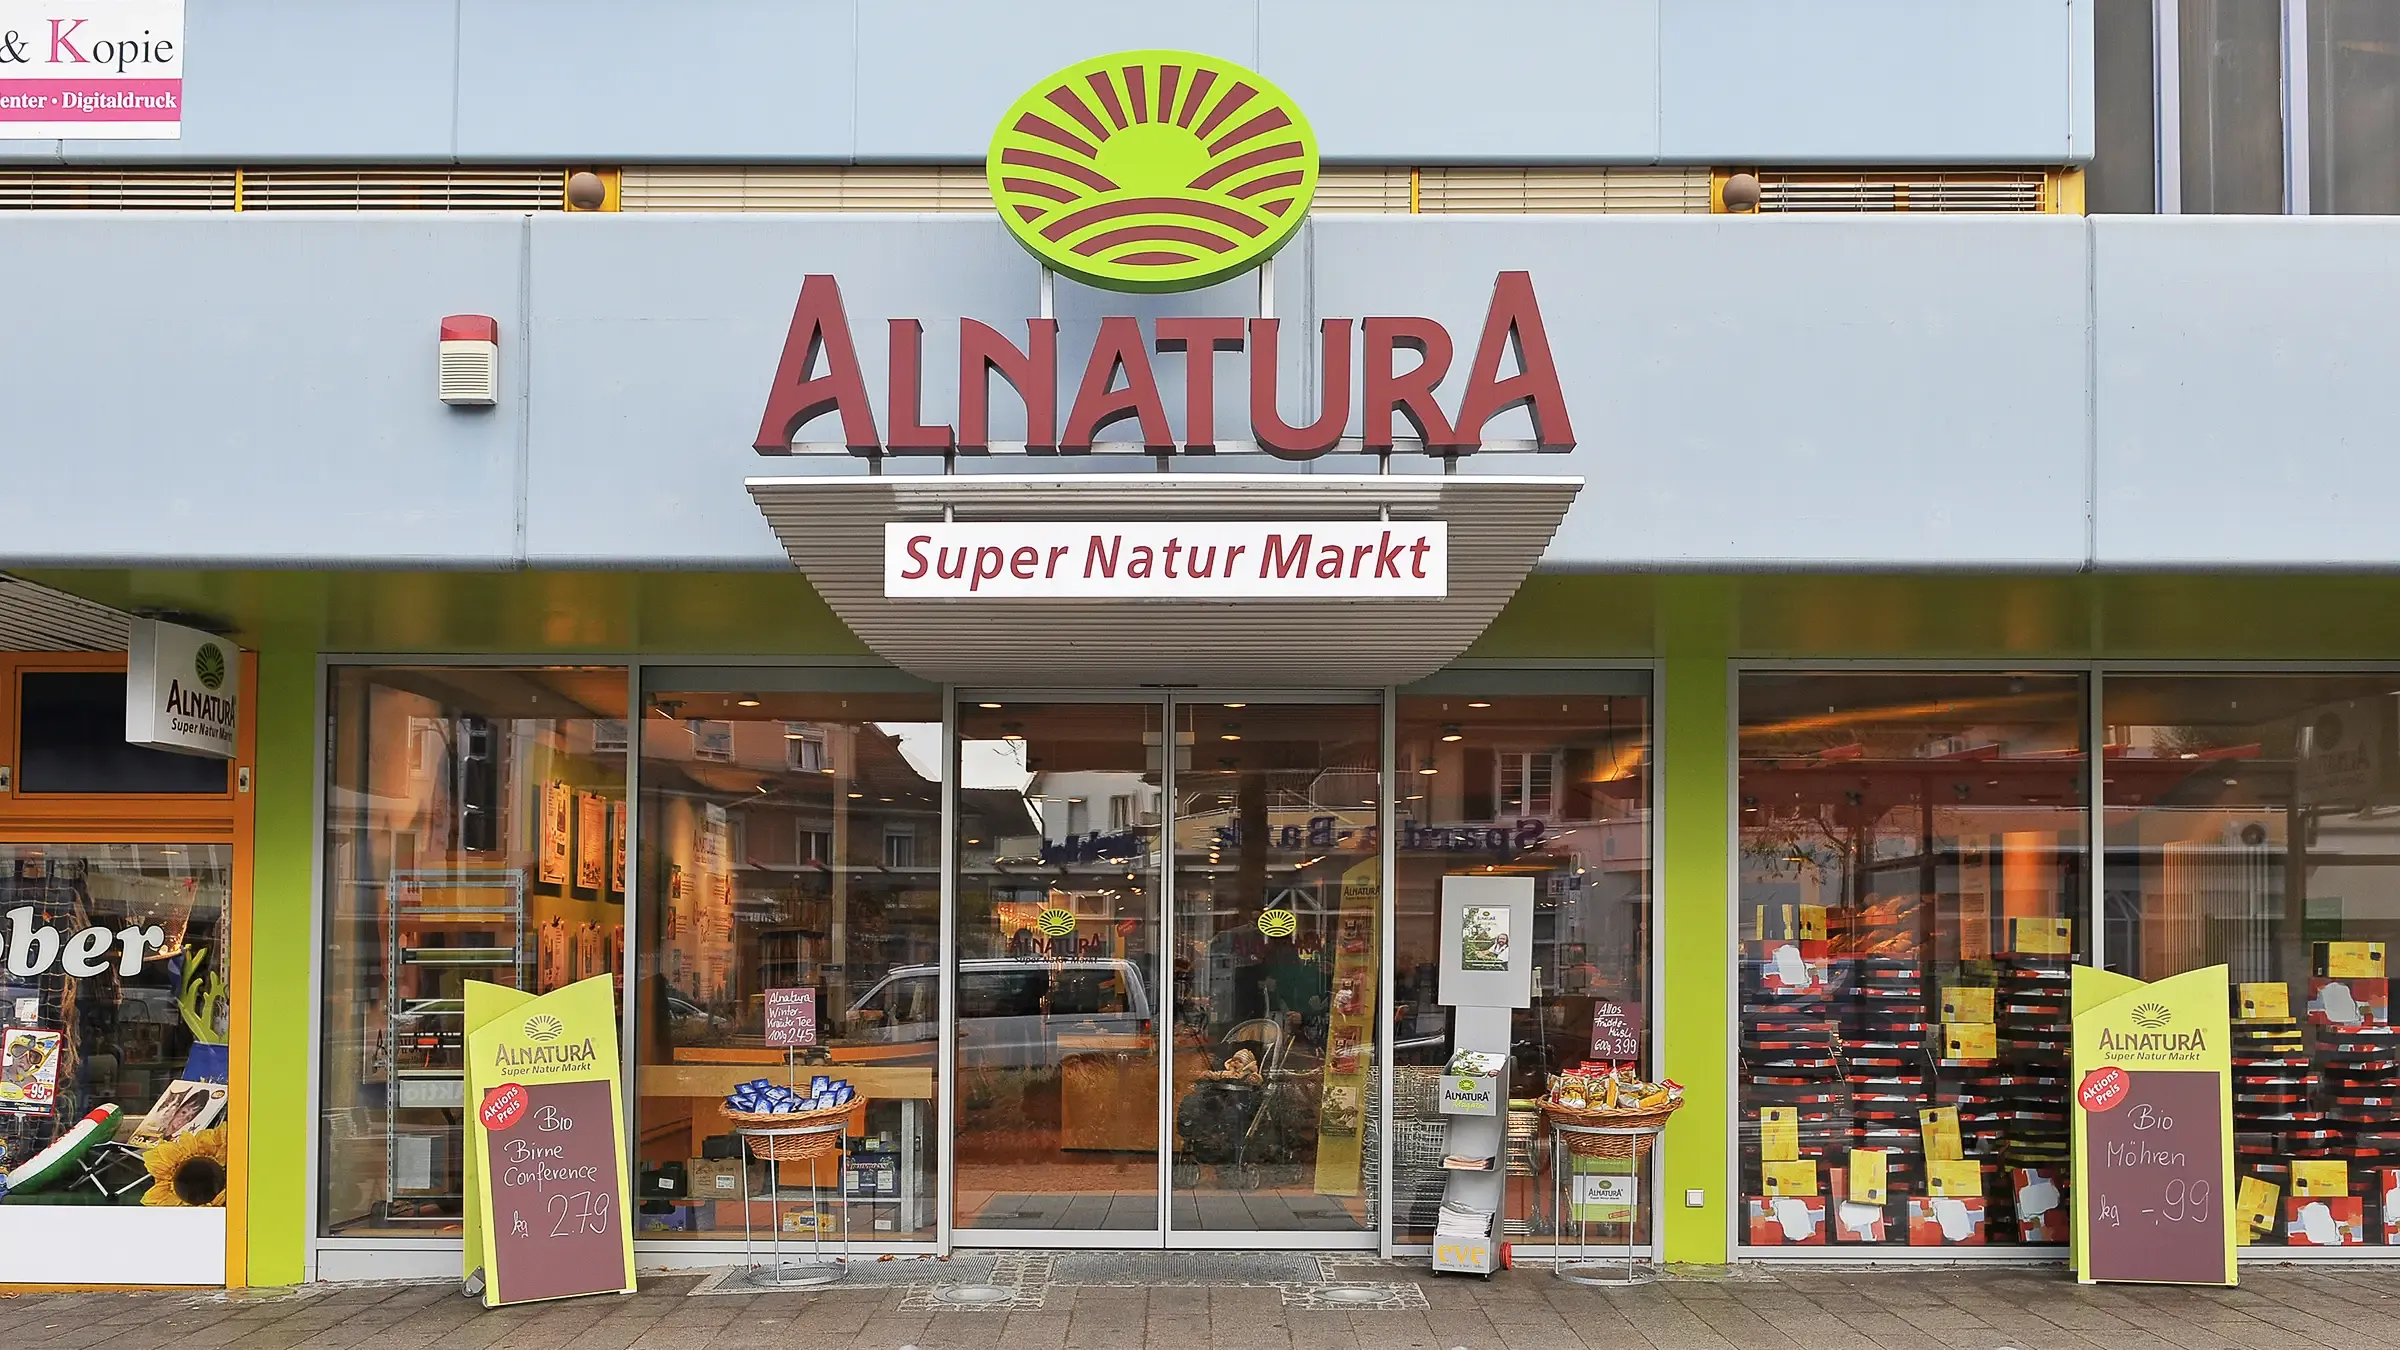 Alnatura Super Natur Markt in Germany, europe | Wine,Dairy,Baked Goods,Beer,Fruit & Vegetable,Meat,Tea - Country Helper